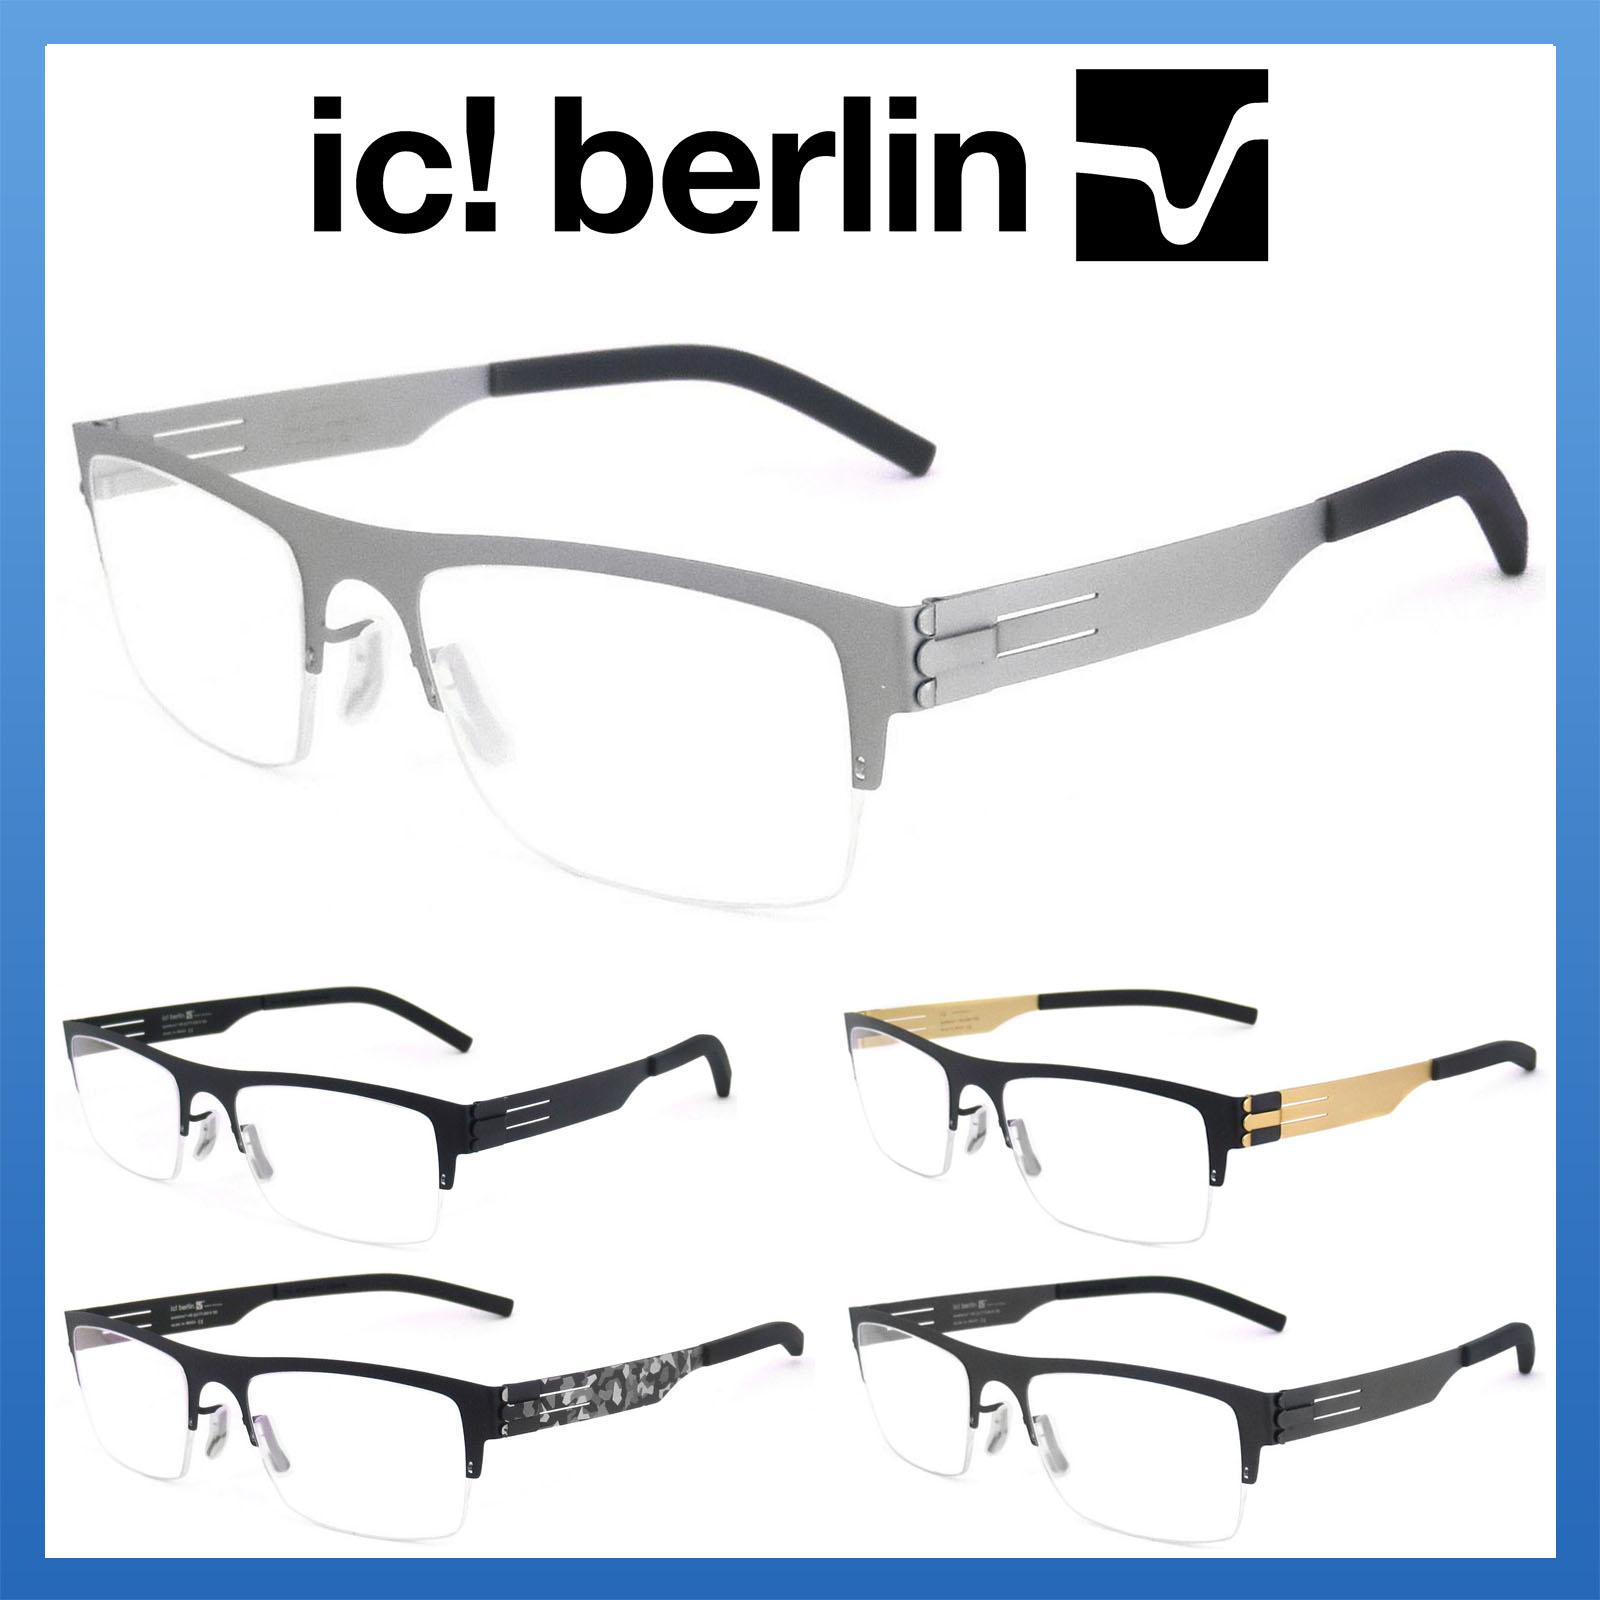 Ic Berlin แว่นตารุ่น 006 กรอบเซาะร่อง Square ทรงสี่เหลี่ยม ขาข้อต่อ ไม่ใช้น็อด วัสดุ สแตนเลส สตีล (สำหรับตัดเลนส์) Gouging frame Eyeglass leg joints Stainless Steel material Eyewear Top Glasses ทางร้านเรามีบริการรับตัดเลนส์